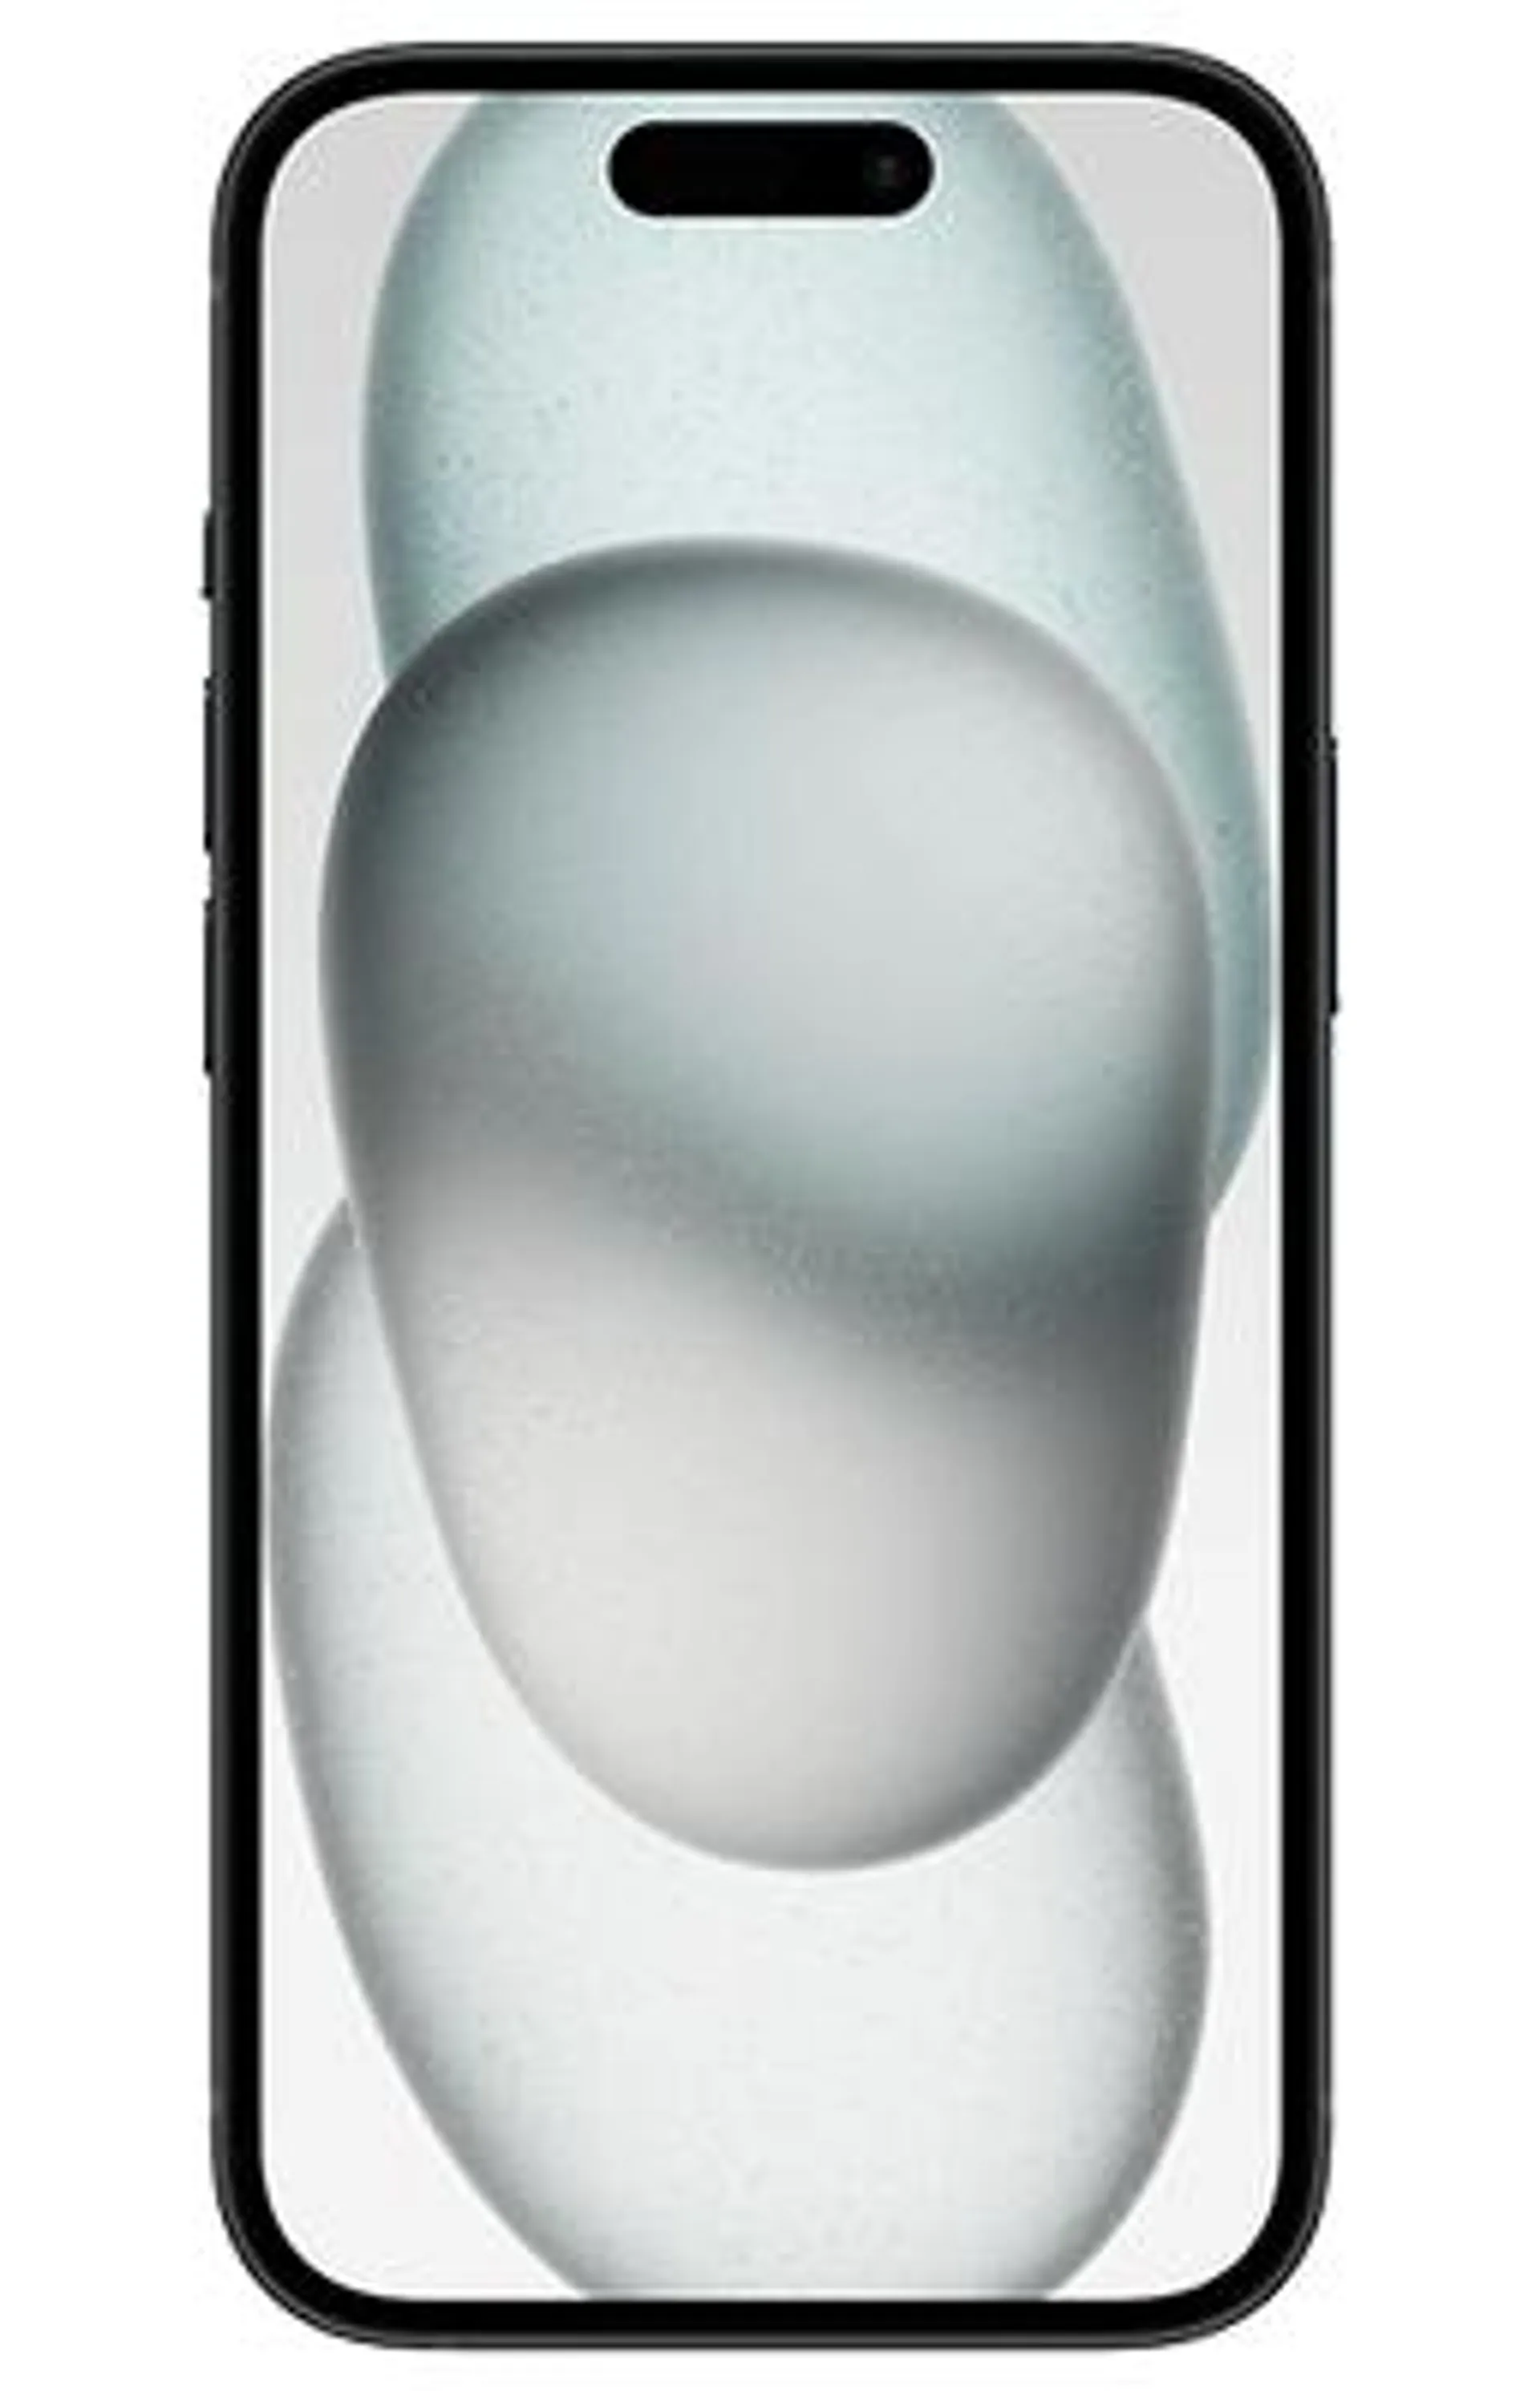 Apple iPhone 15 128GB Zwart